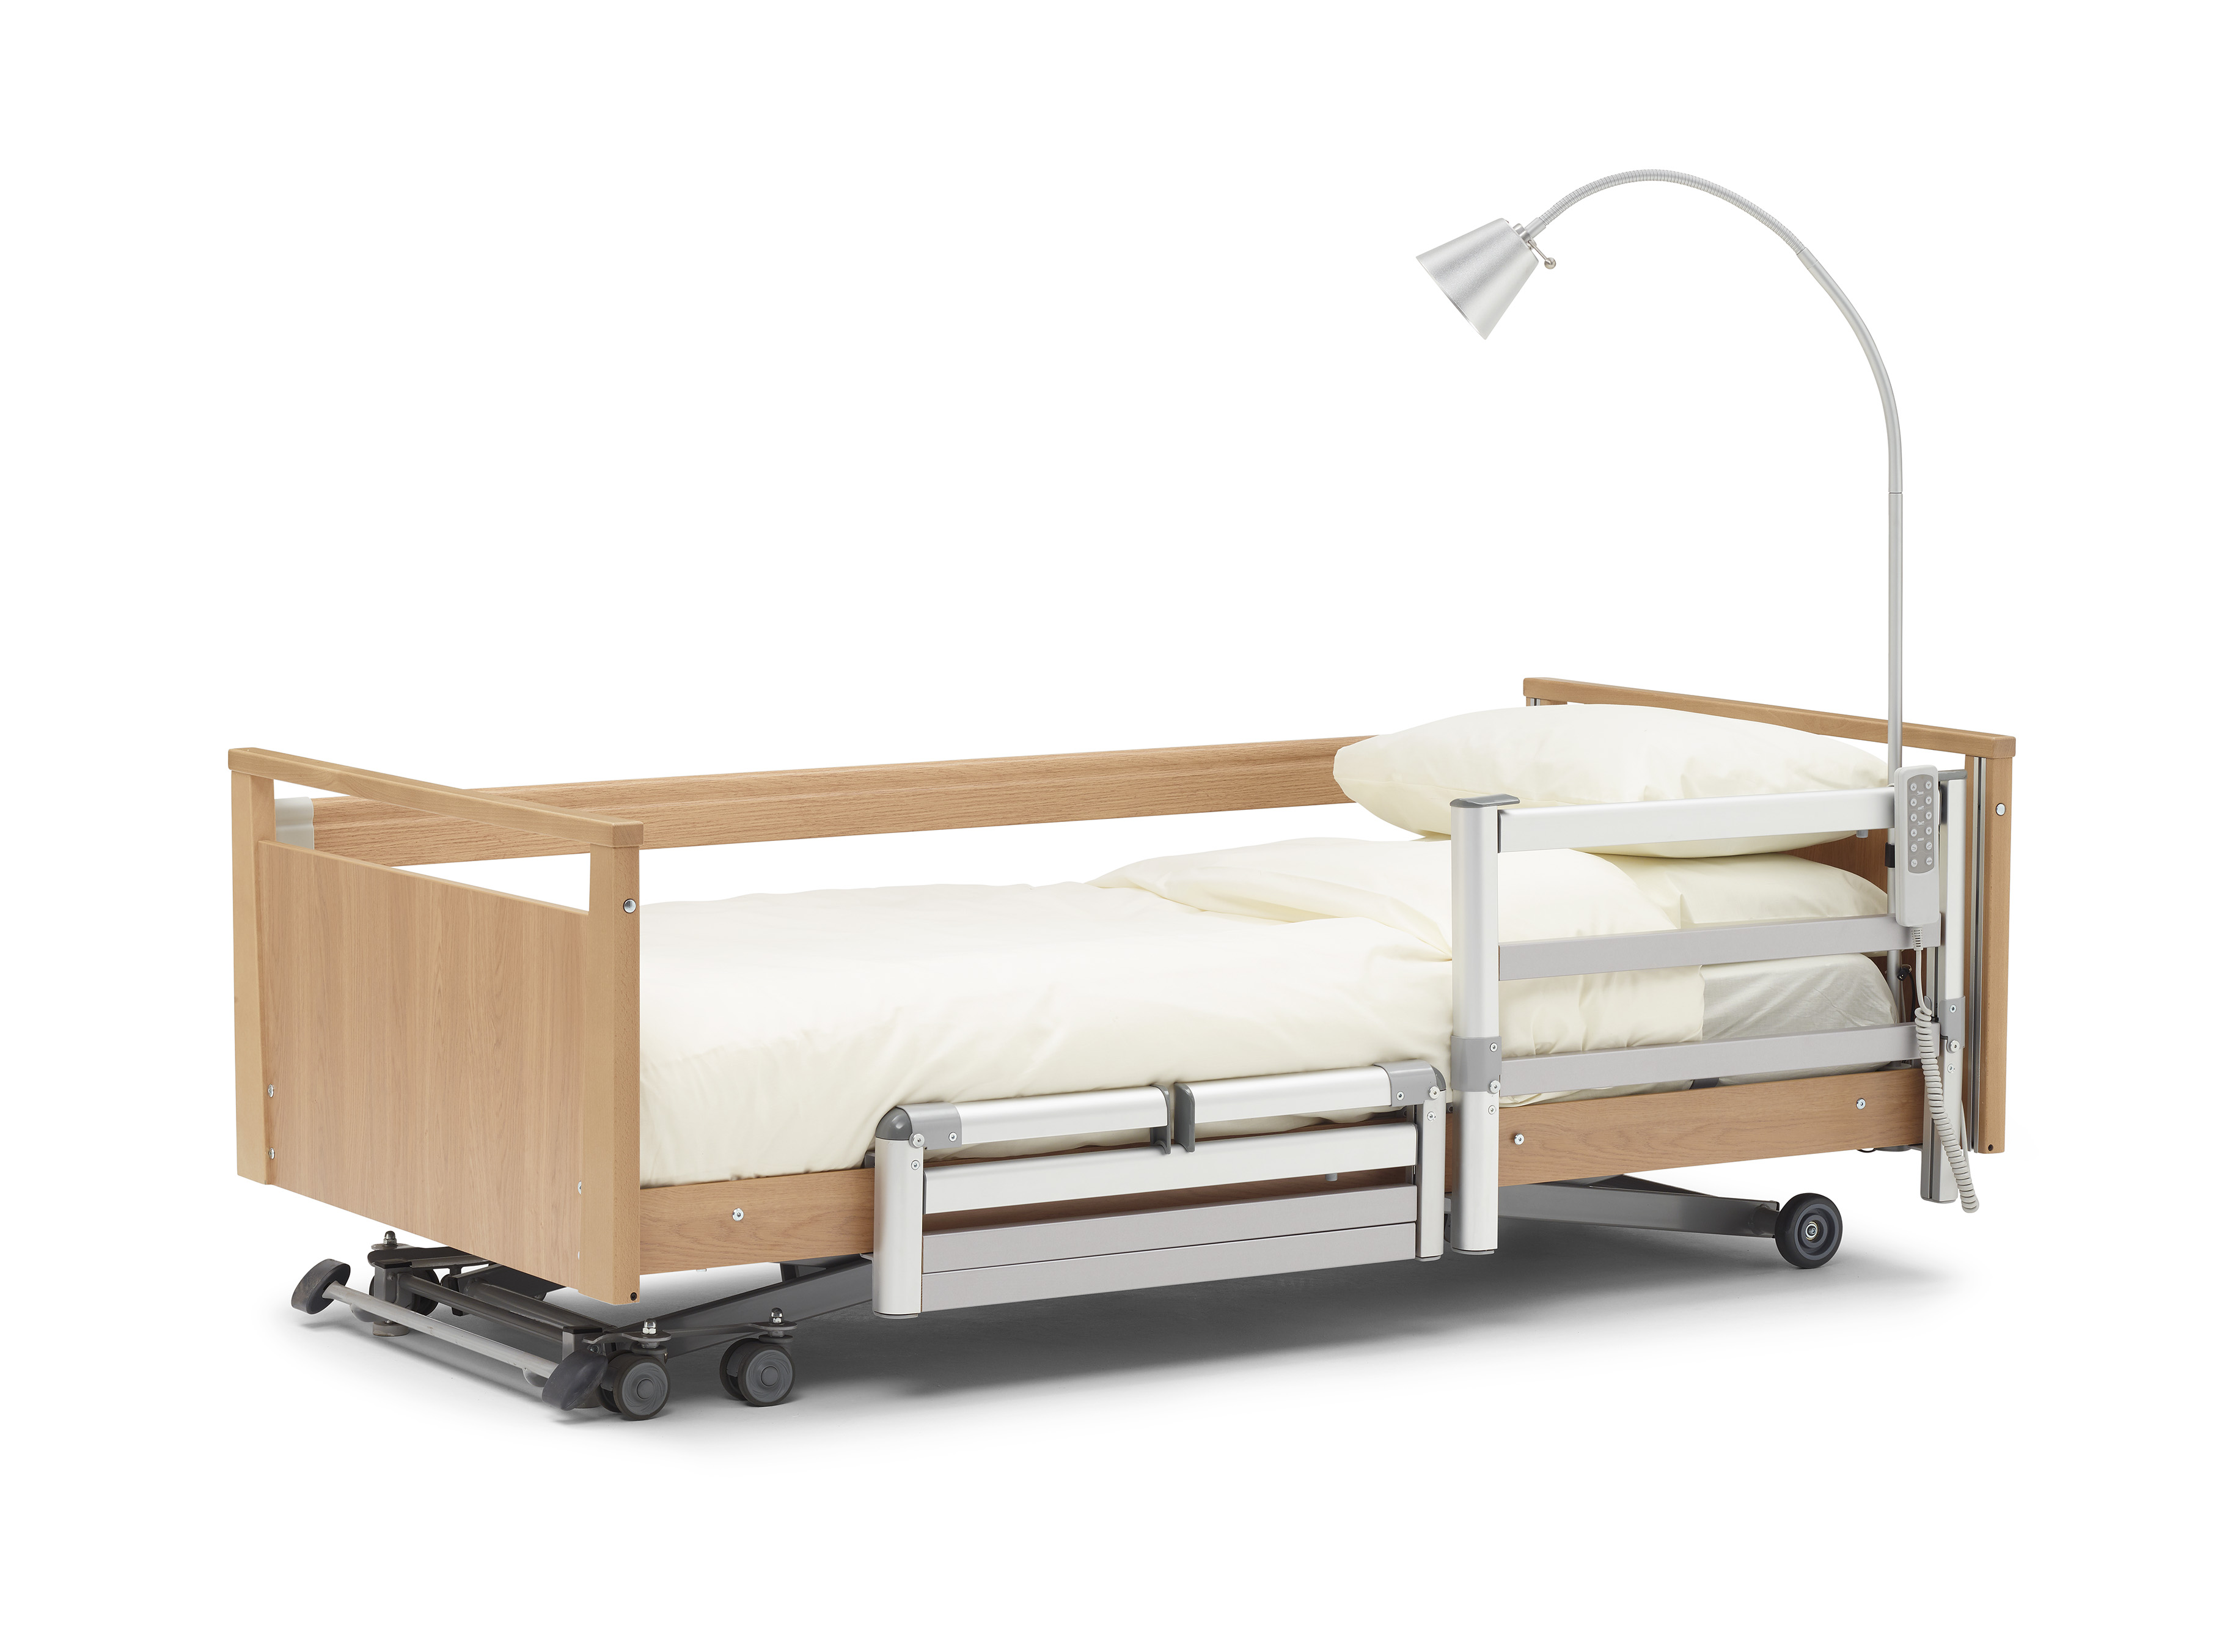 Impress 3 bed c/w Classic head/foot boards and  4 x aluminium split side rails only
Finish: Light Sorano Oak